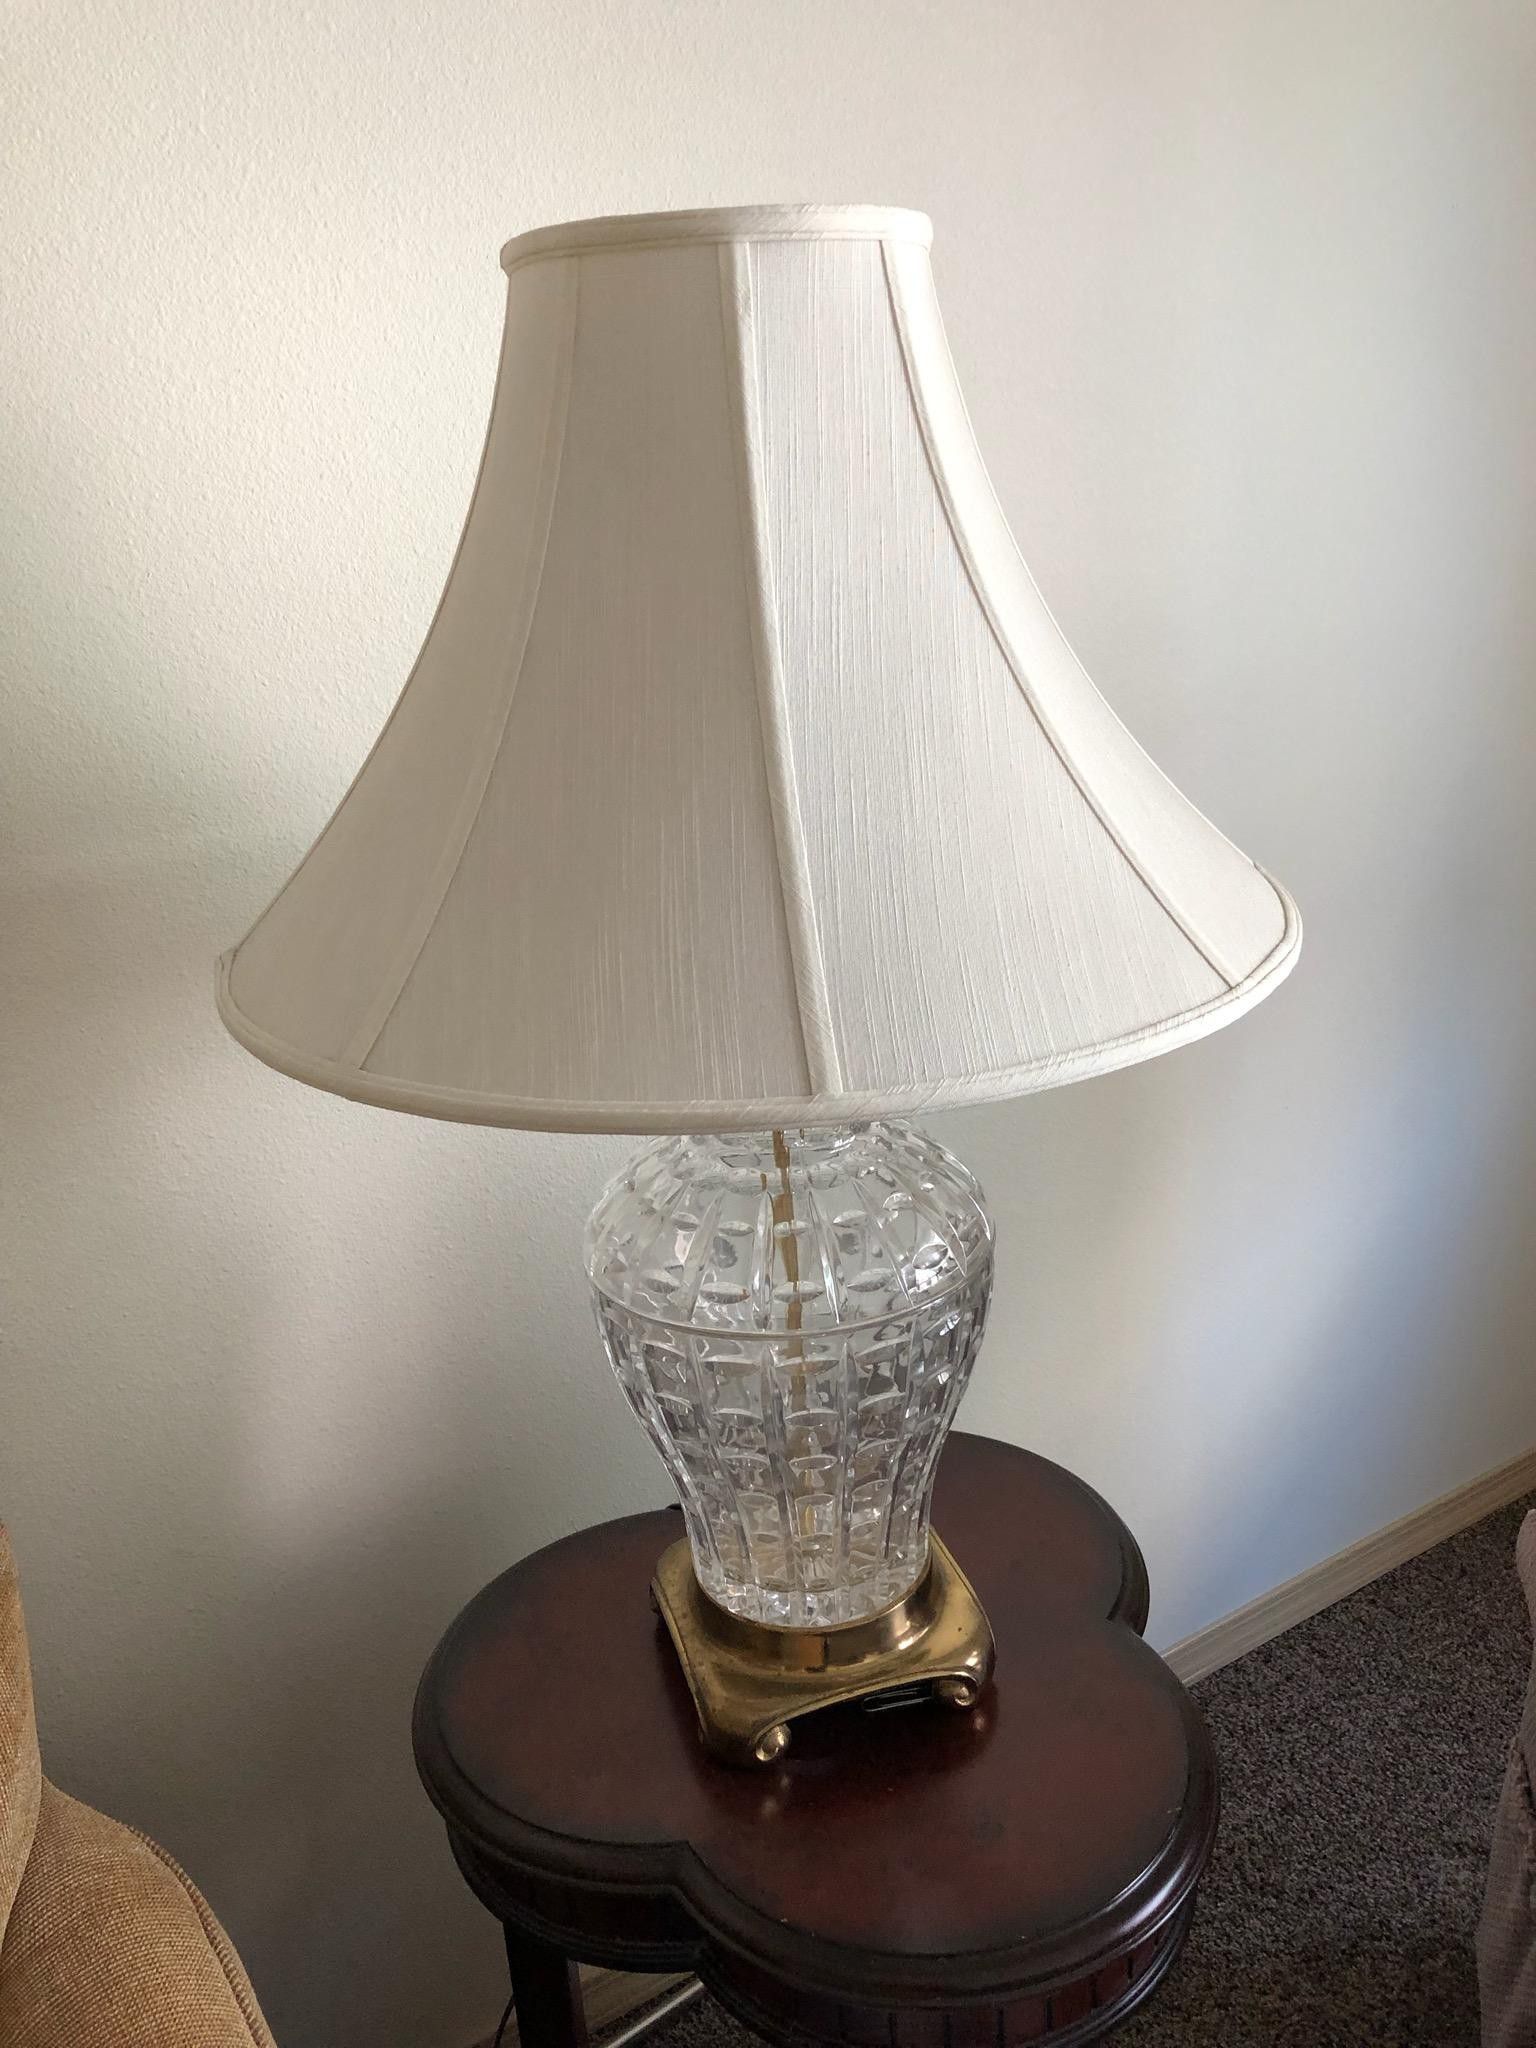 Lovely crystal lamp